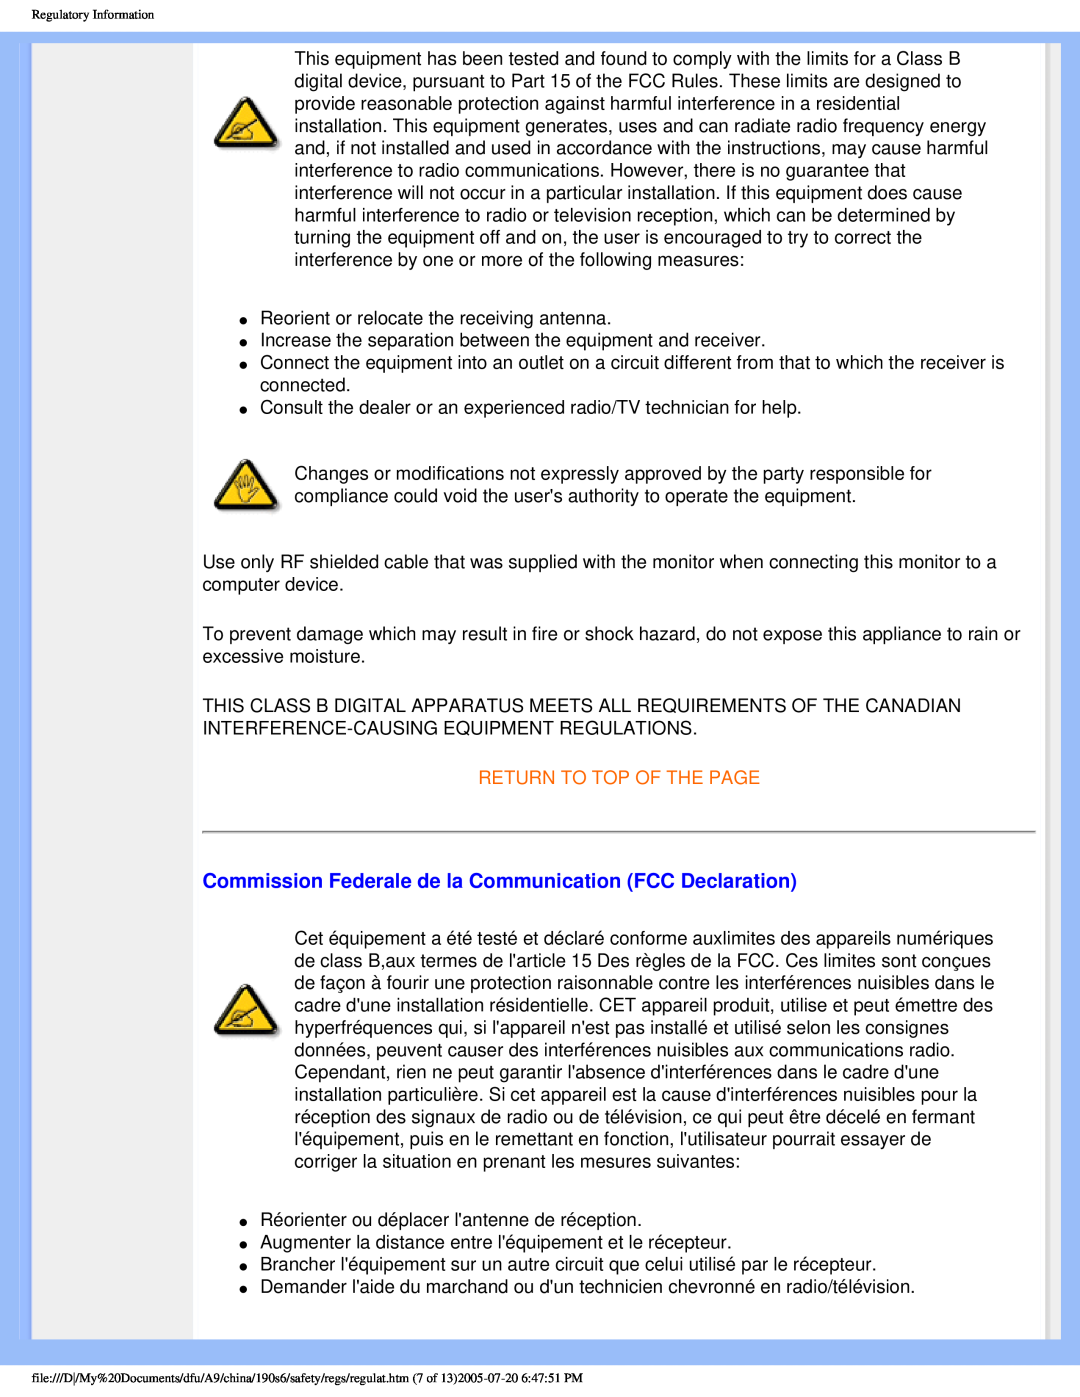 Philips 190S6FS manual Commission Federale de la Communication FCC Declaration, Return To Top Of The Page 